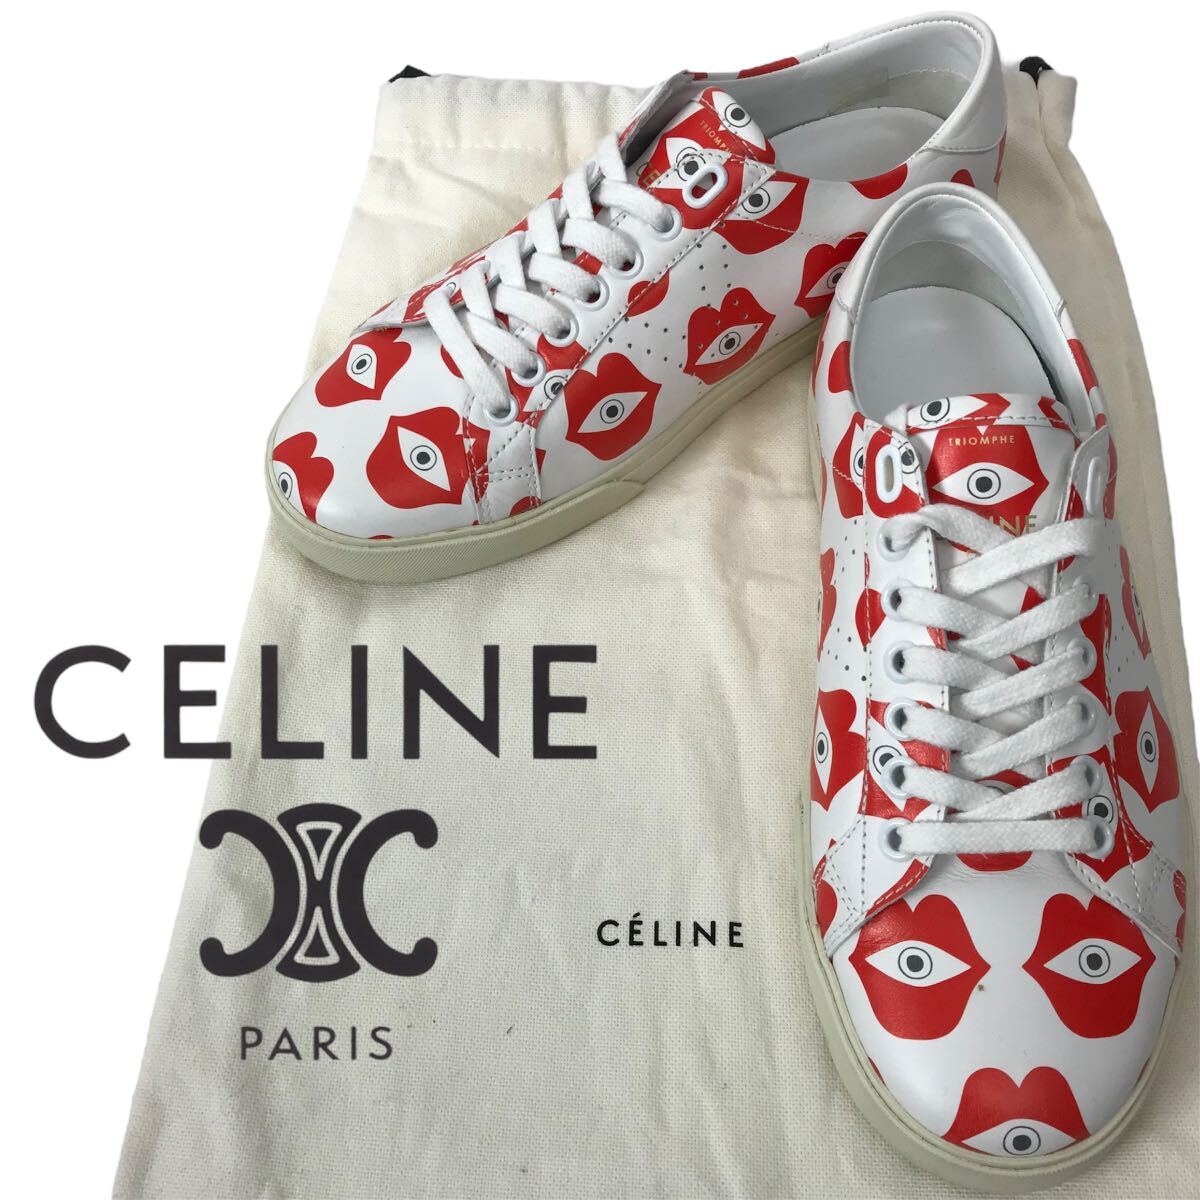 j239 superior article CELINE Celine leather low cut sneakers shoes eye lip print design white 36 Spain made CWN09 regular goods 